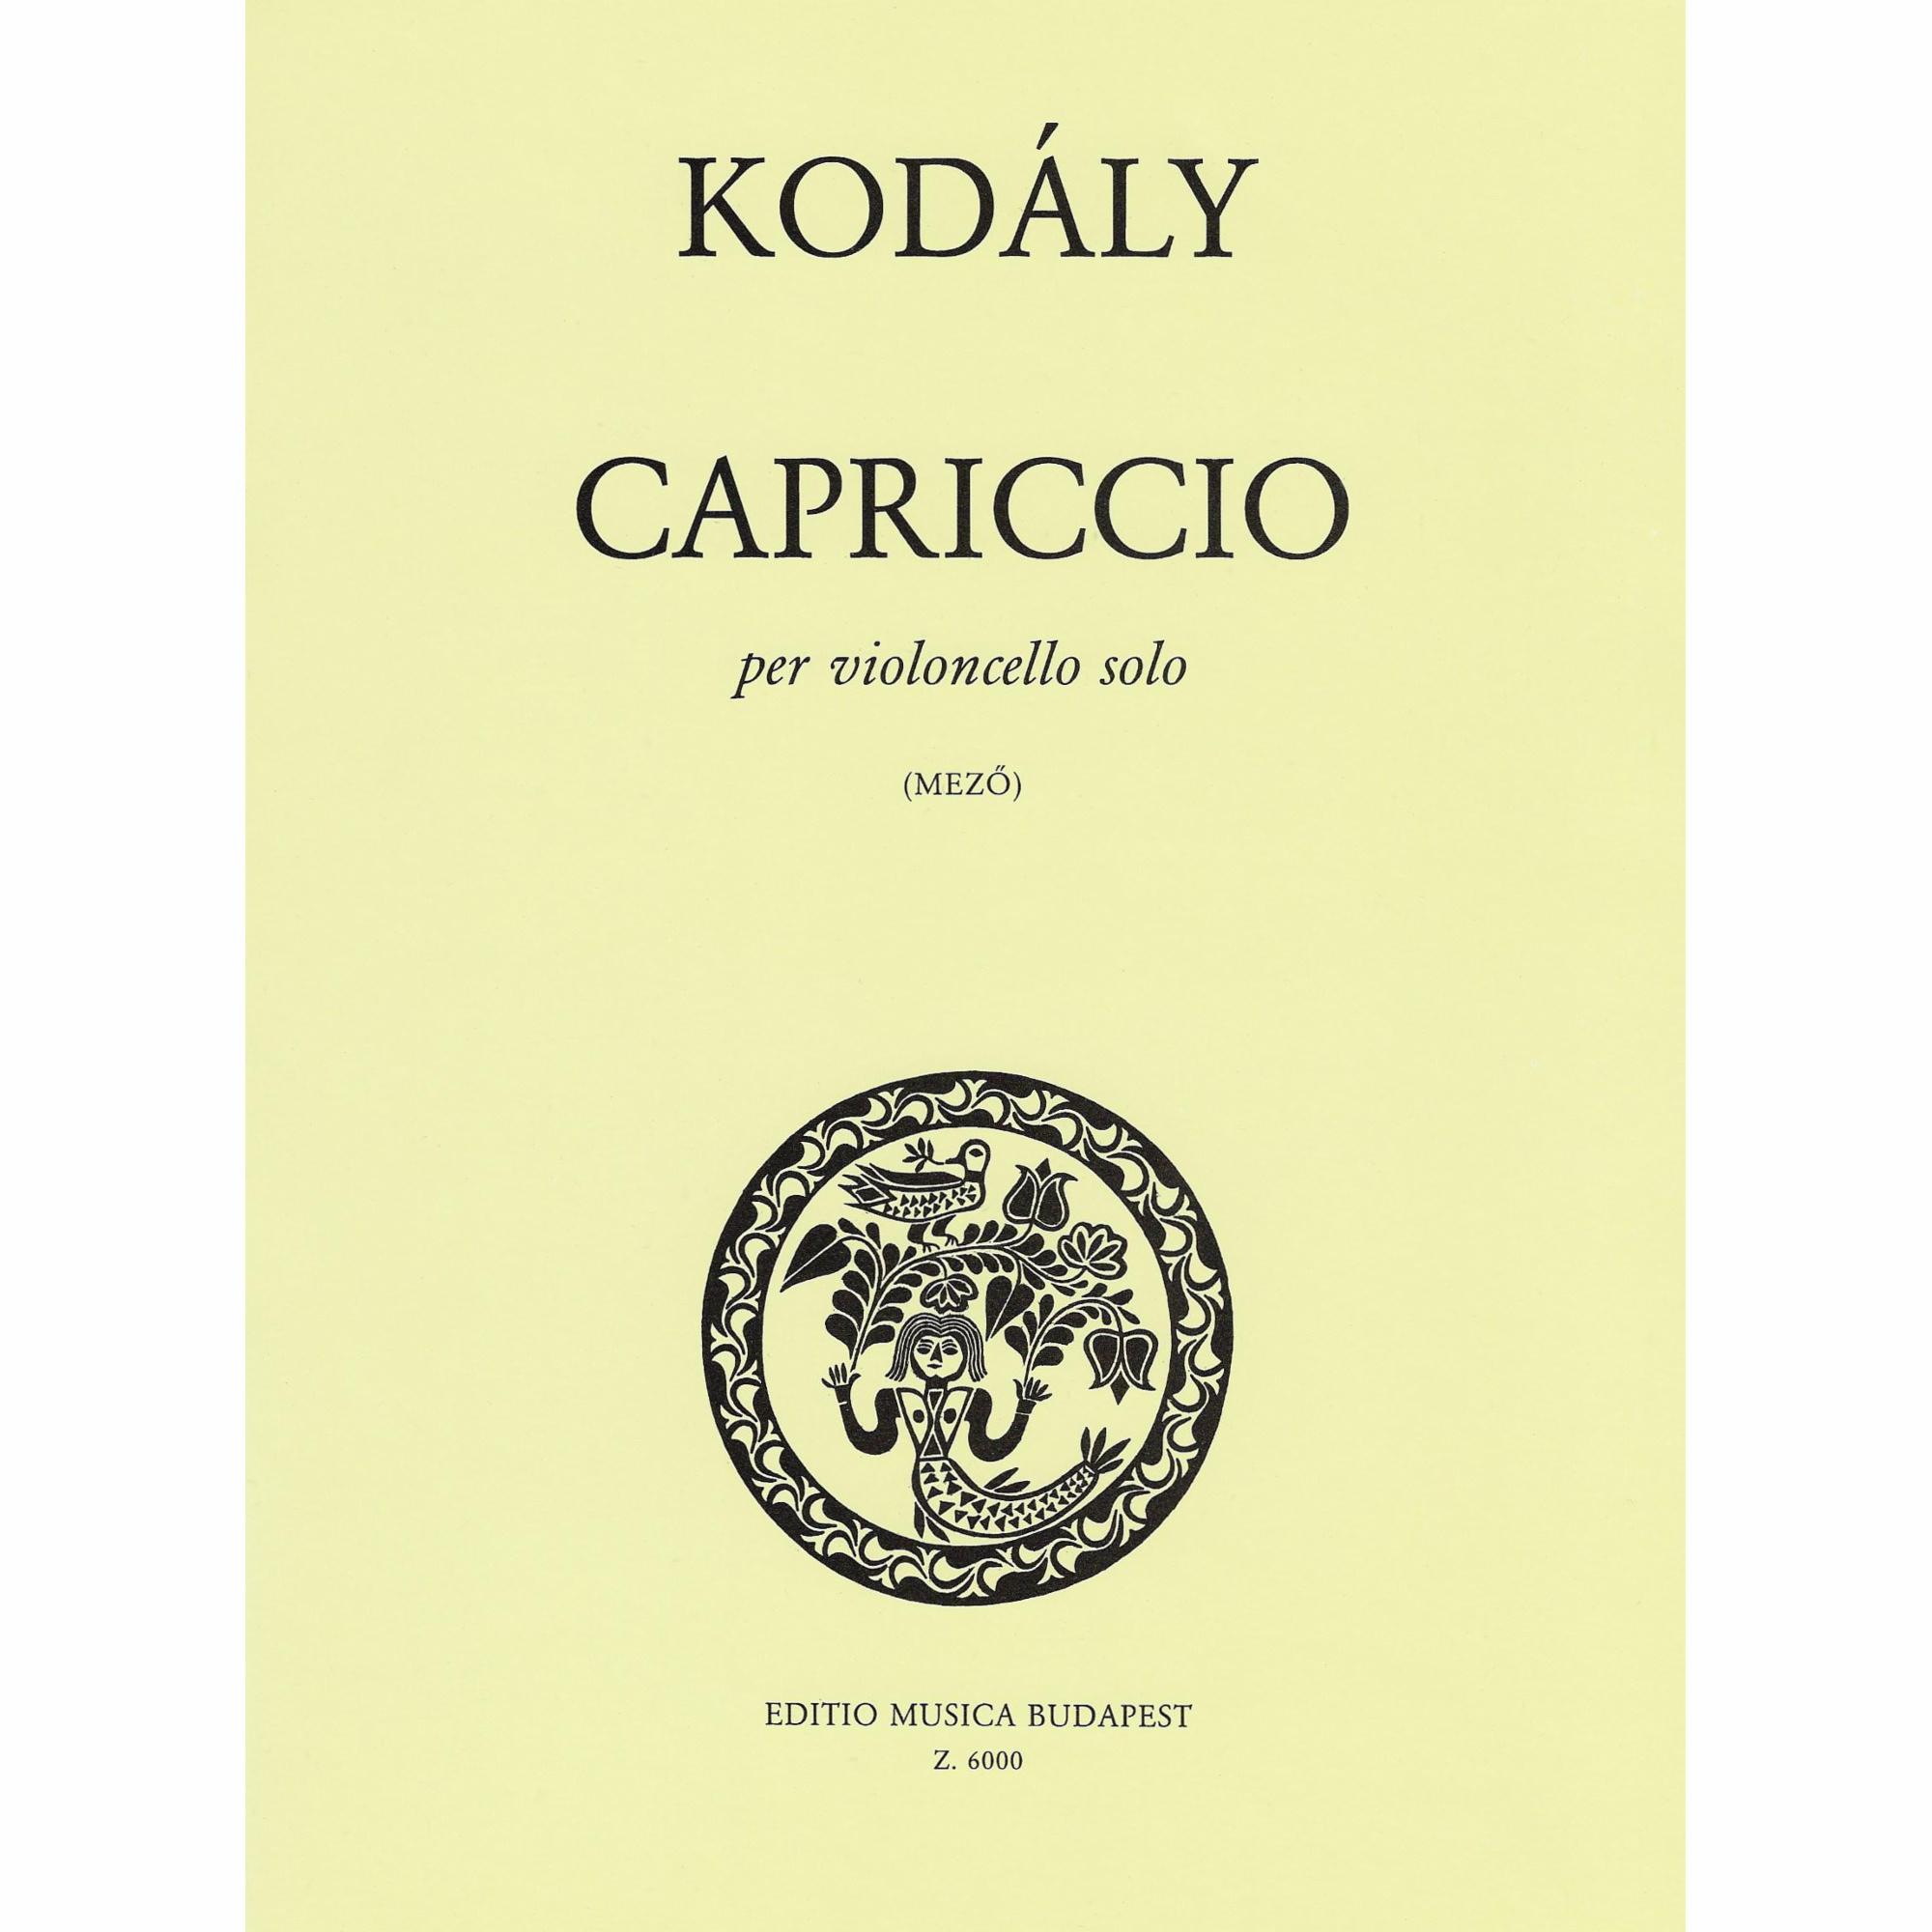 Kodaly -- Capriccio for Solo Cello